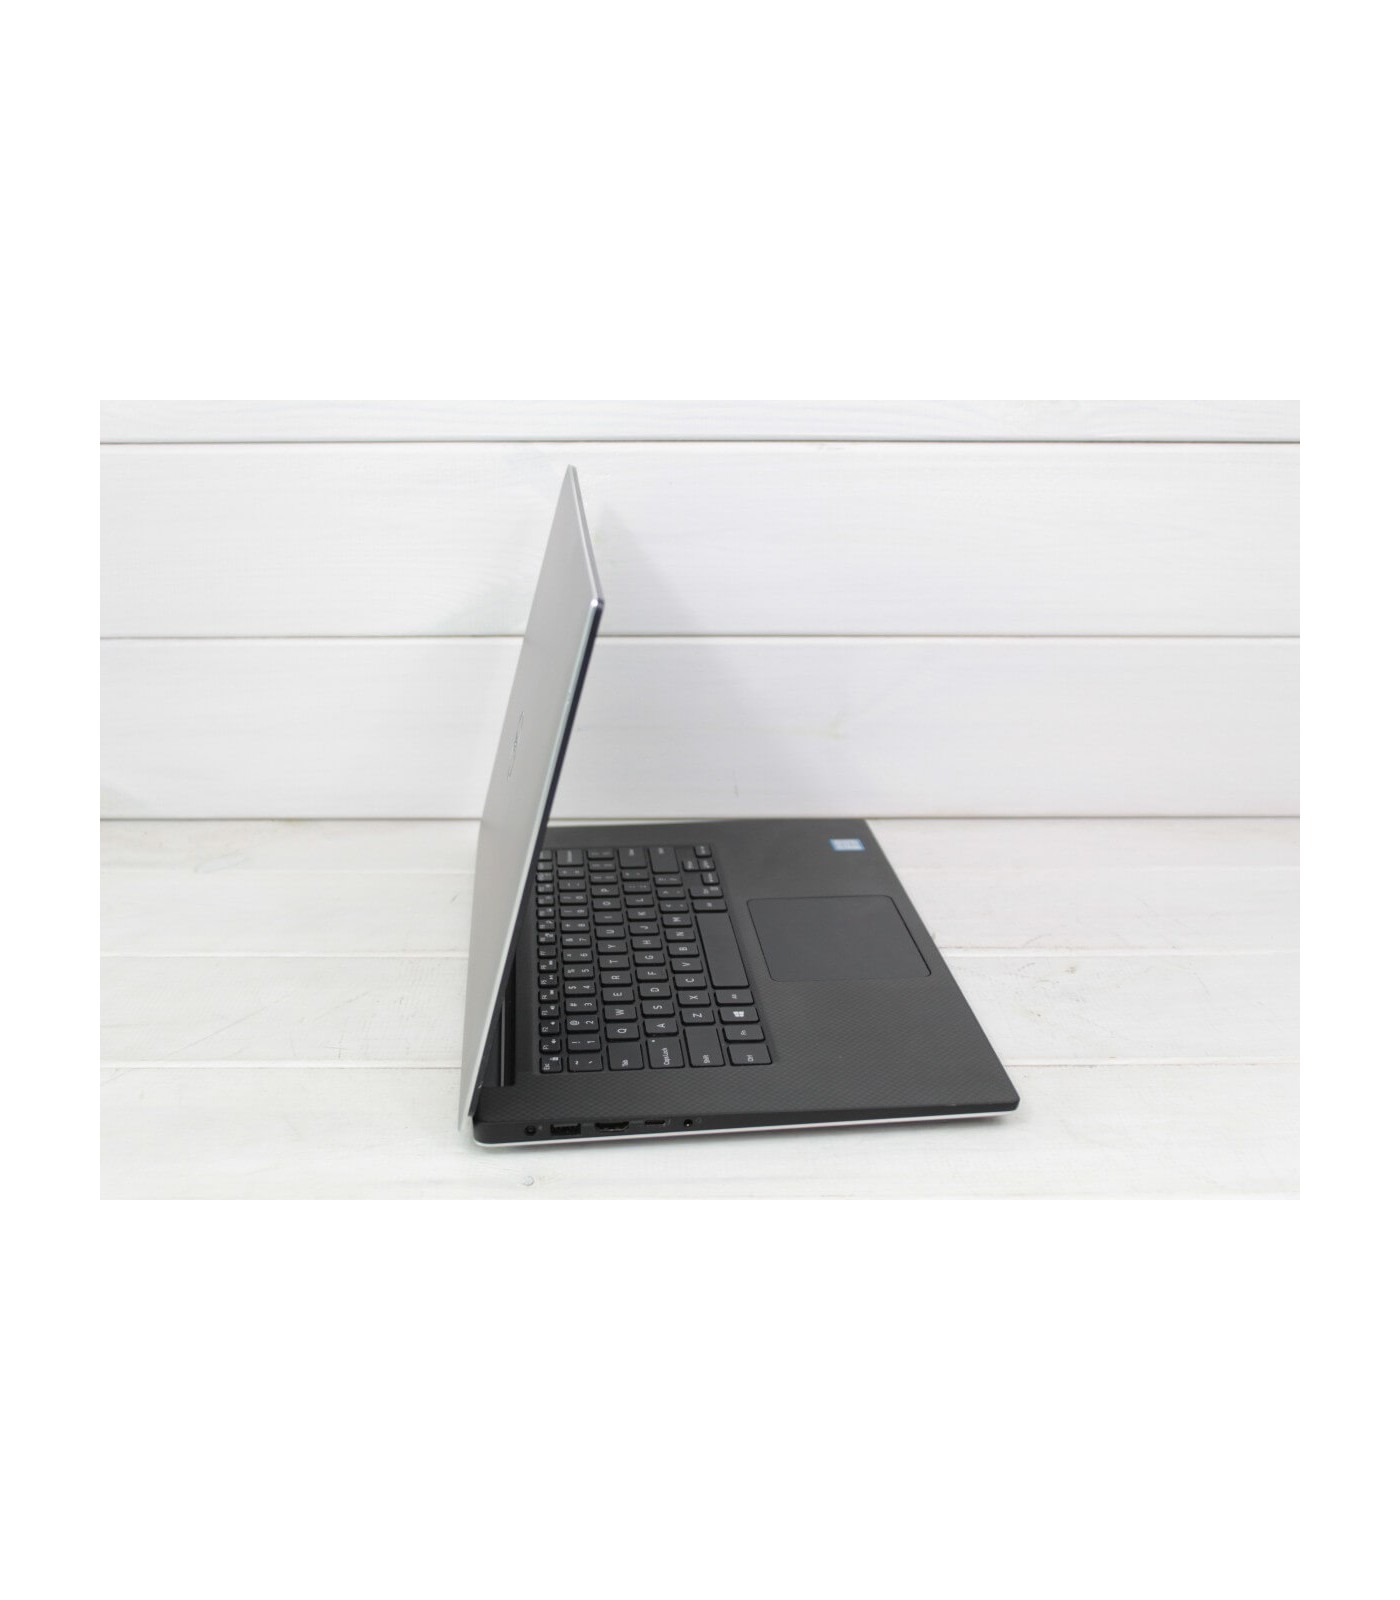 Poleasingowy laptop Dell Precision 5510 z Intel Xeon E3-1505M V5, 1920x1080 IPS, Klasa A+